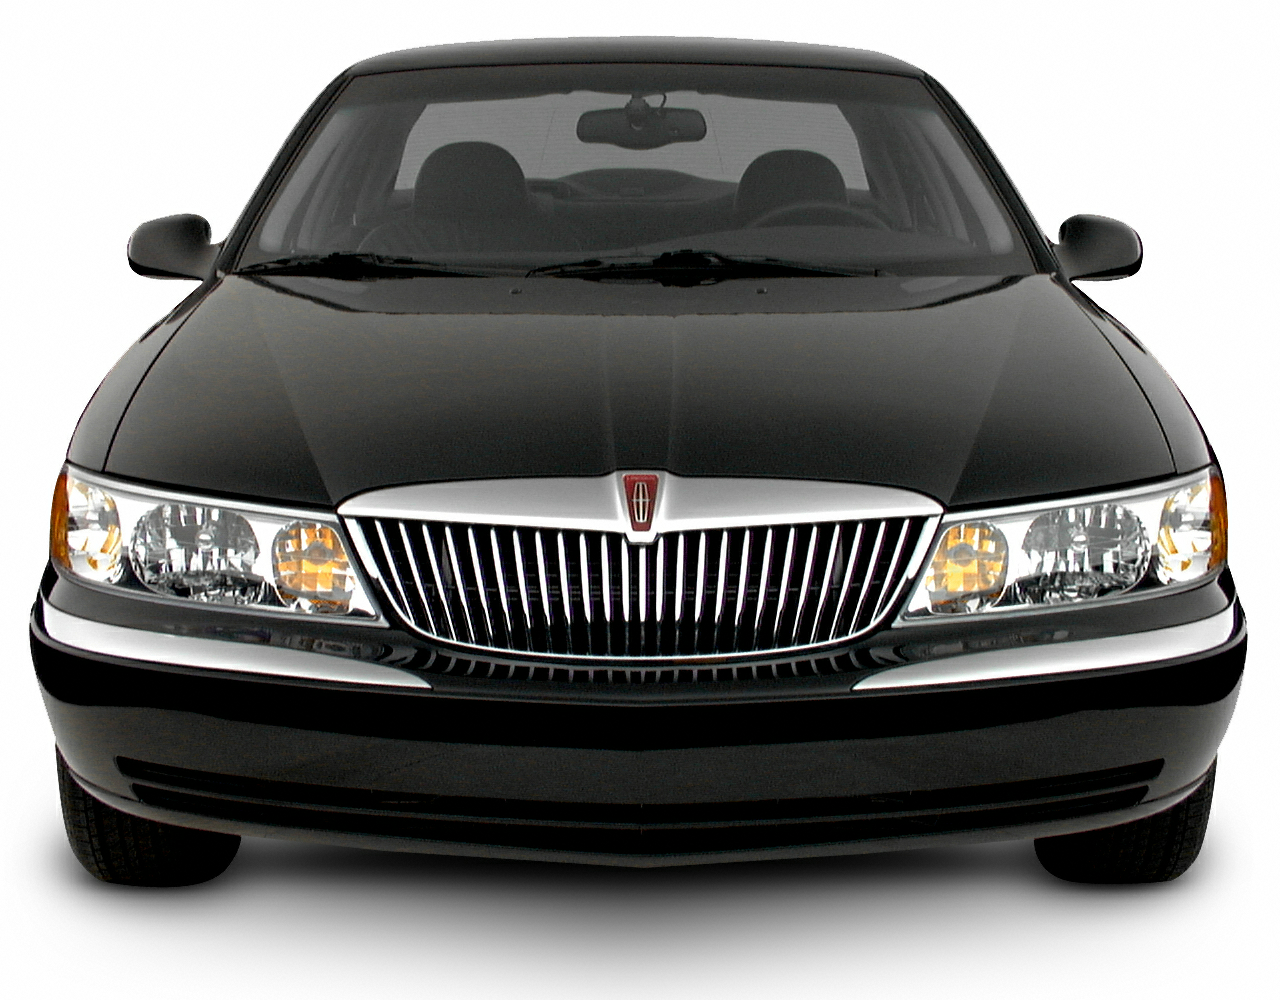 2000 Lincoln Continental